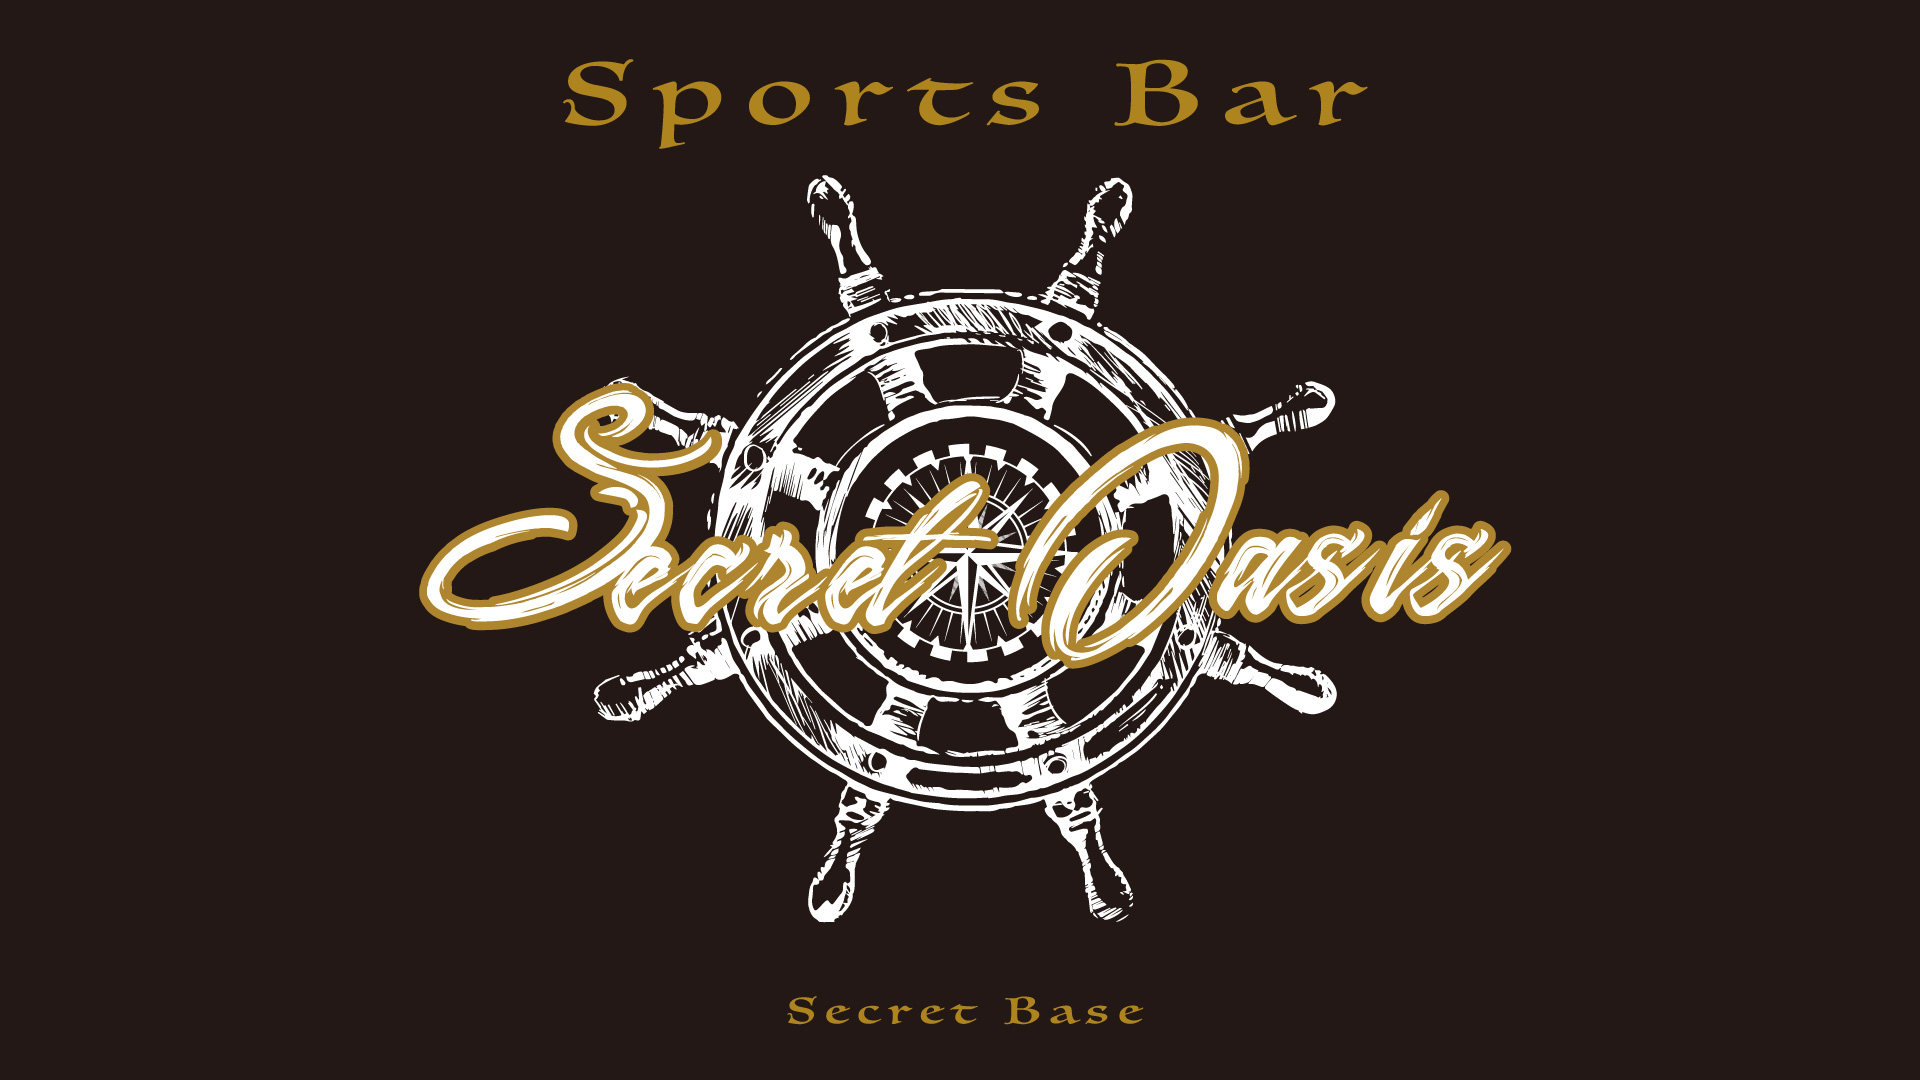 『SportsBar Secret Oasis』のWEBページが完成！